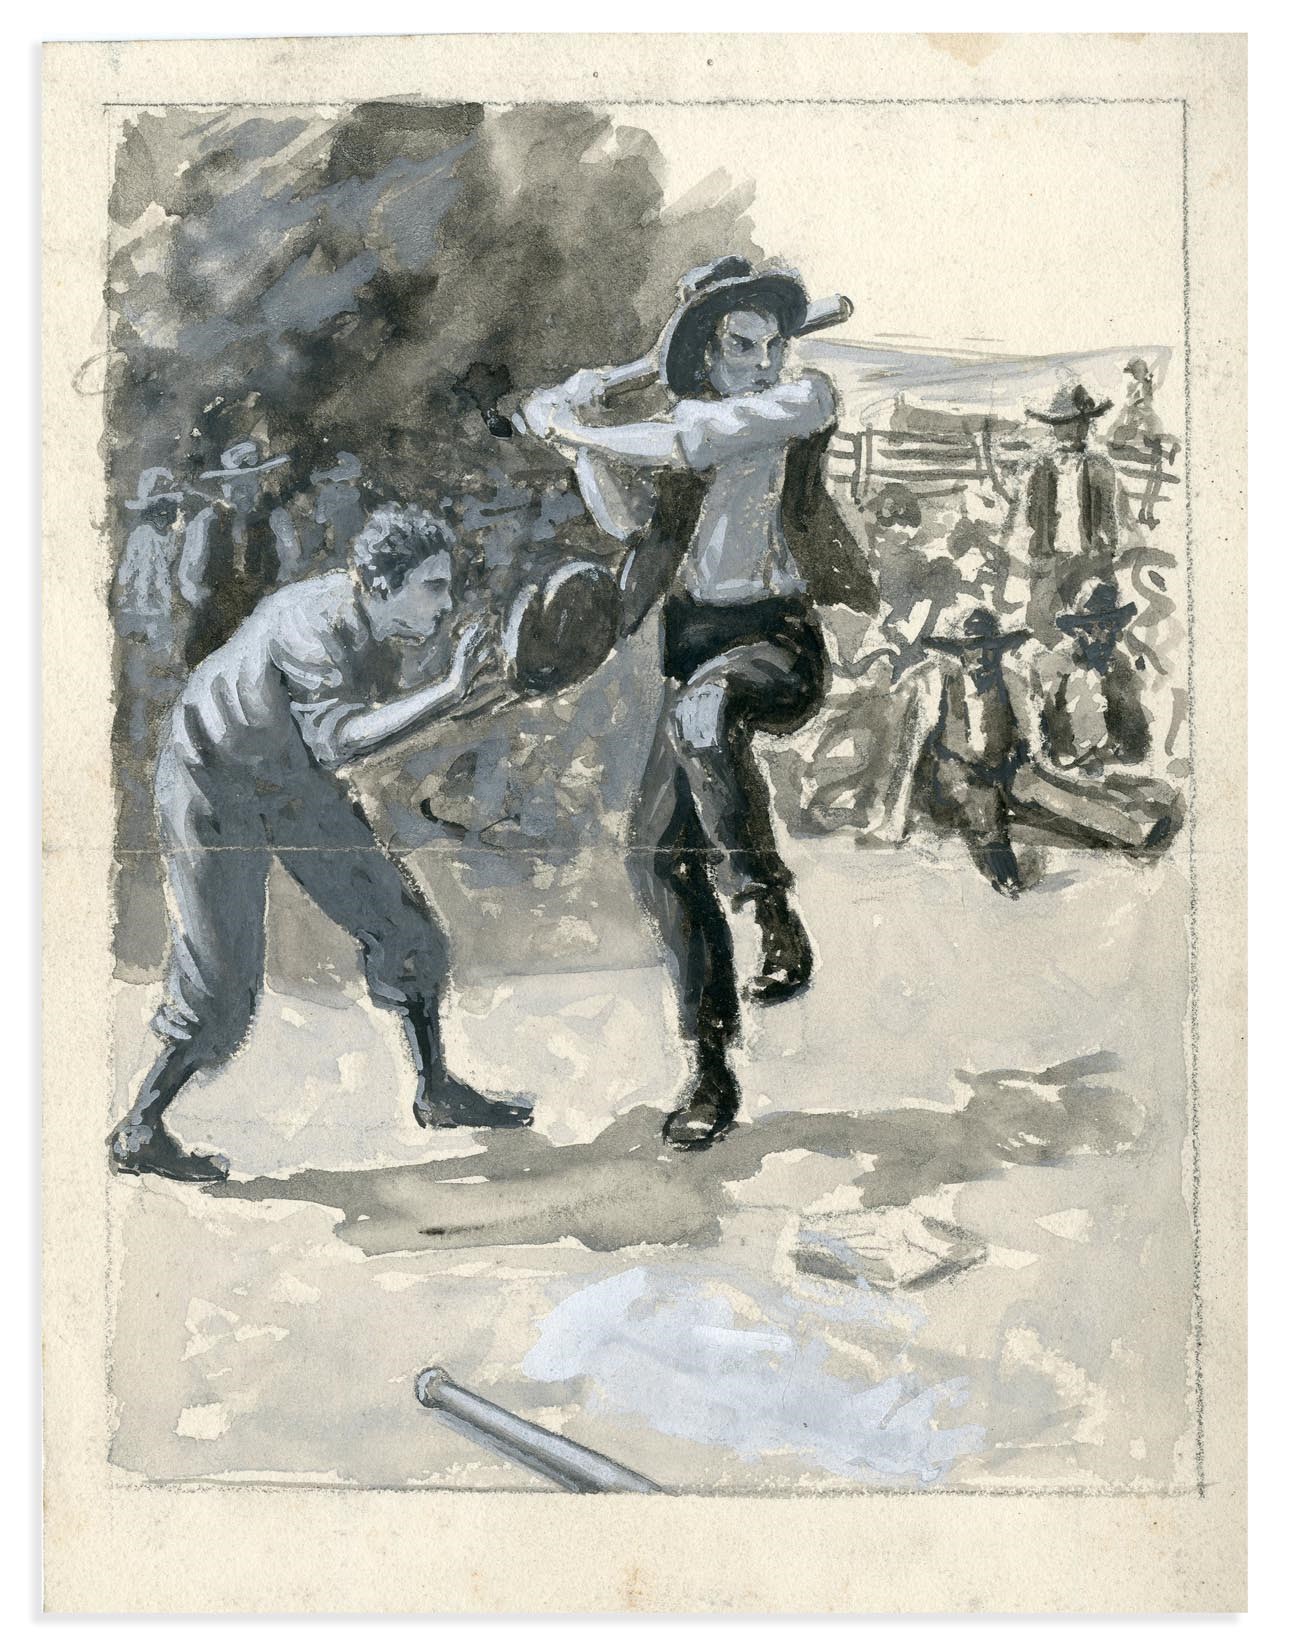 The Baseball Magazine Original Art - 1910s "Town Ball" Baseball Cover Art Study by Gerrit Beneker (1882-1934)